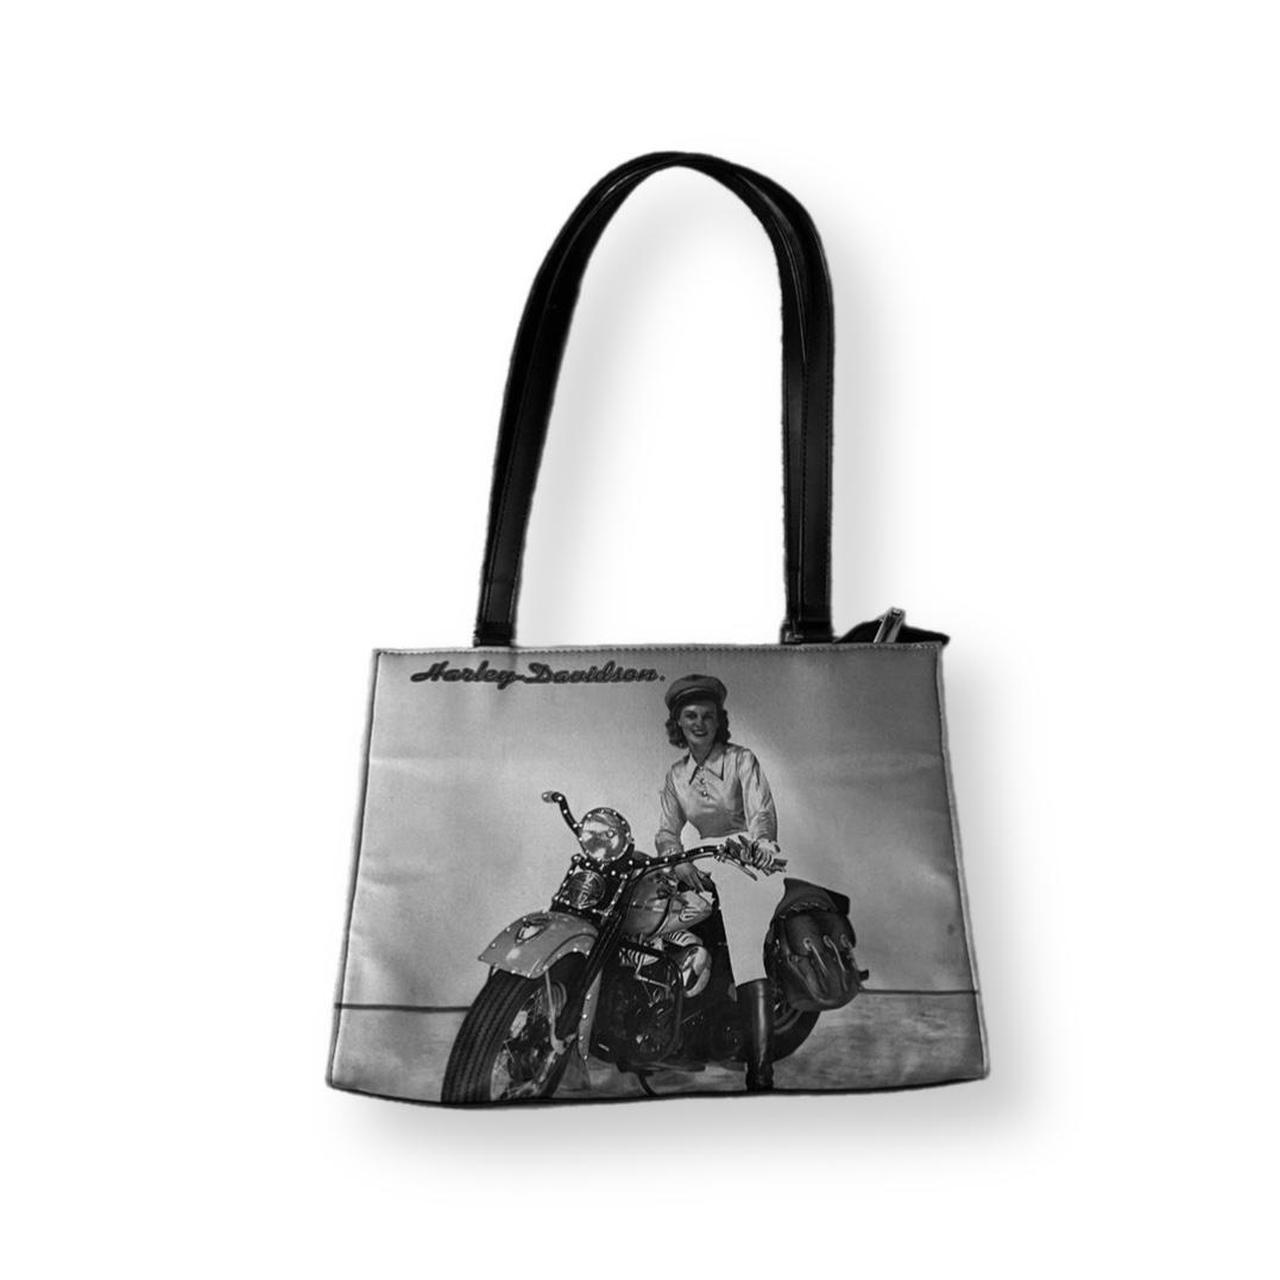 Harley-Davidson, Bags, Harley Davidson Purse